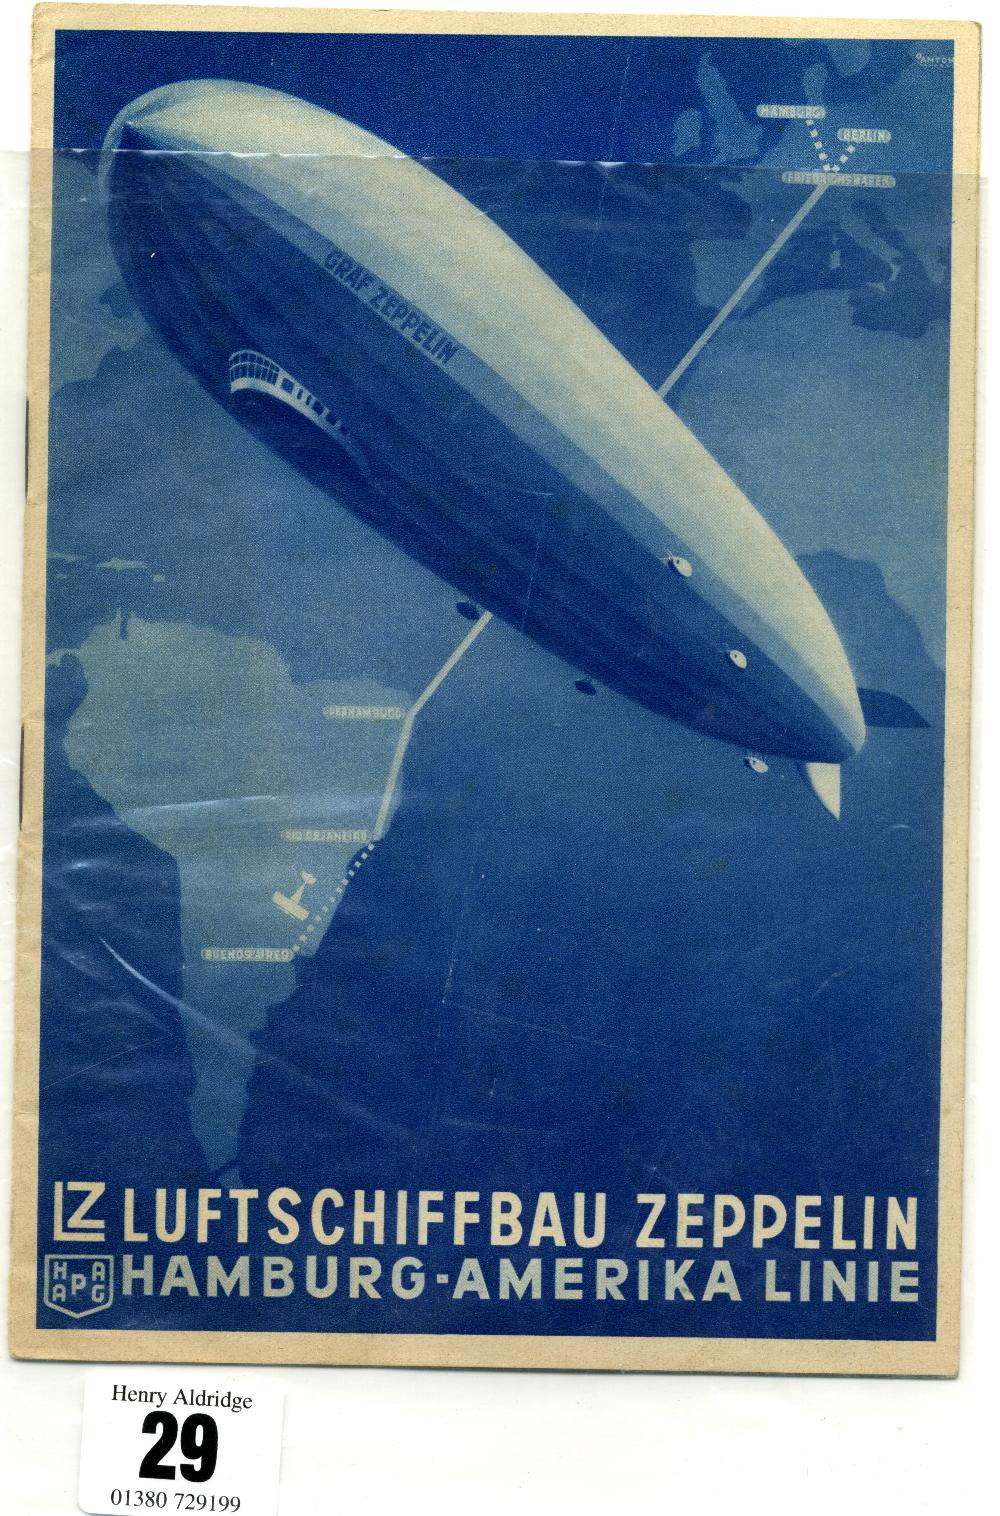 ZEPPELIN/AIRSHIP: Graf Zeppelin brochure, South American service, 1934. Graf Zeppelin flights from